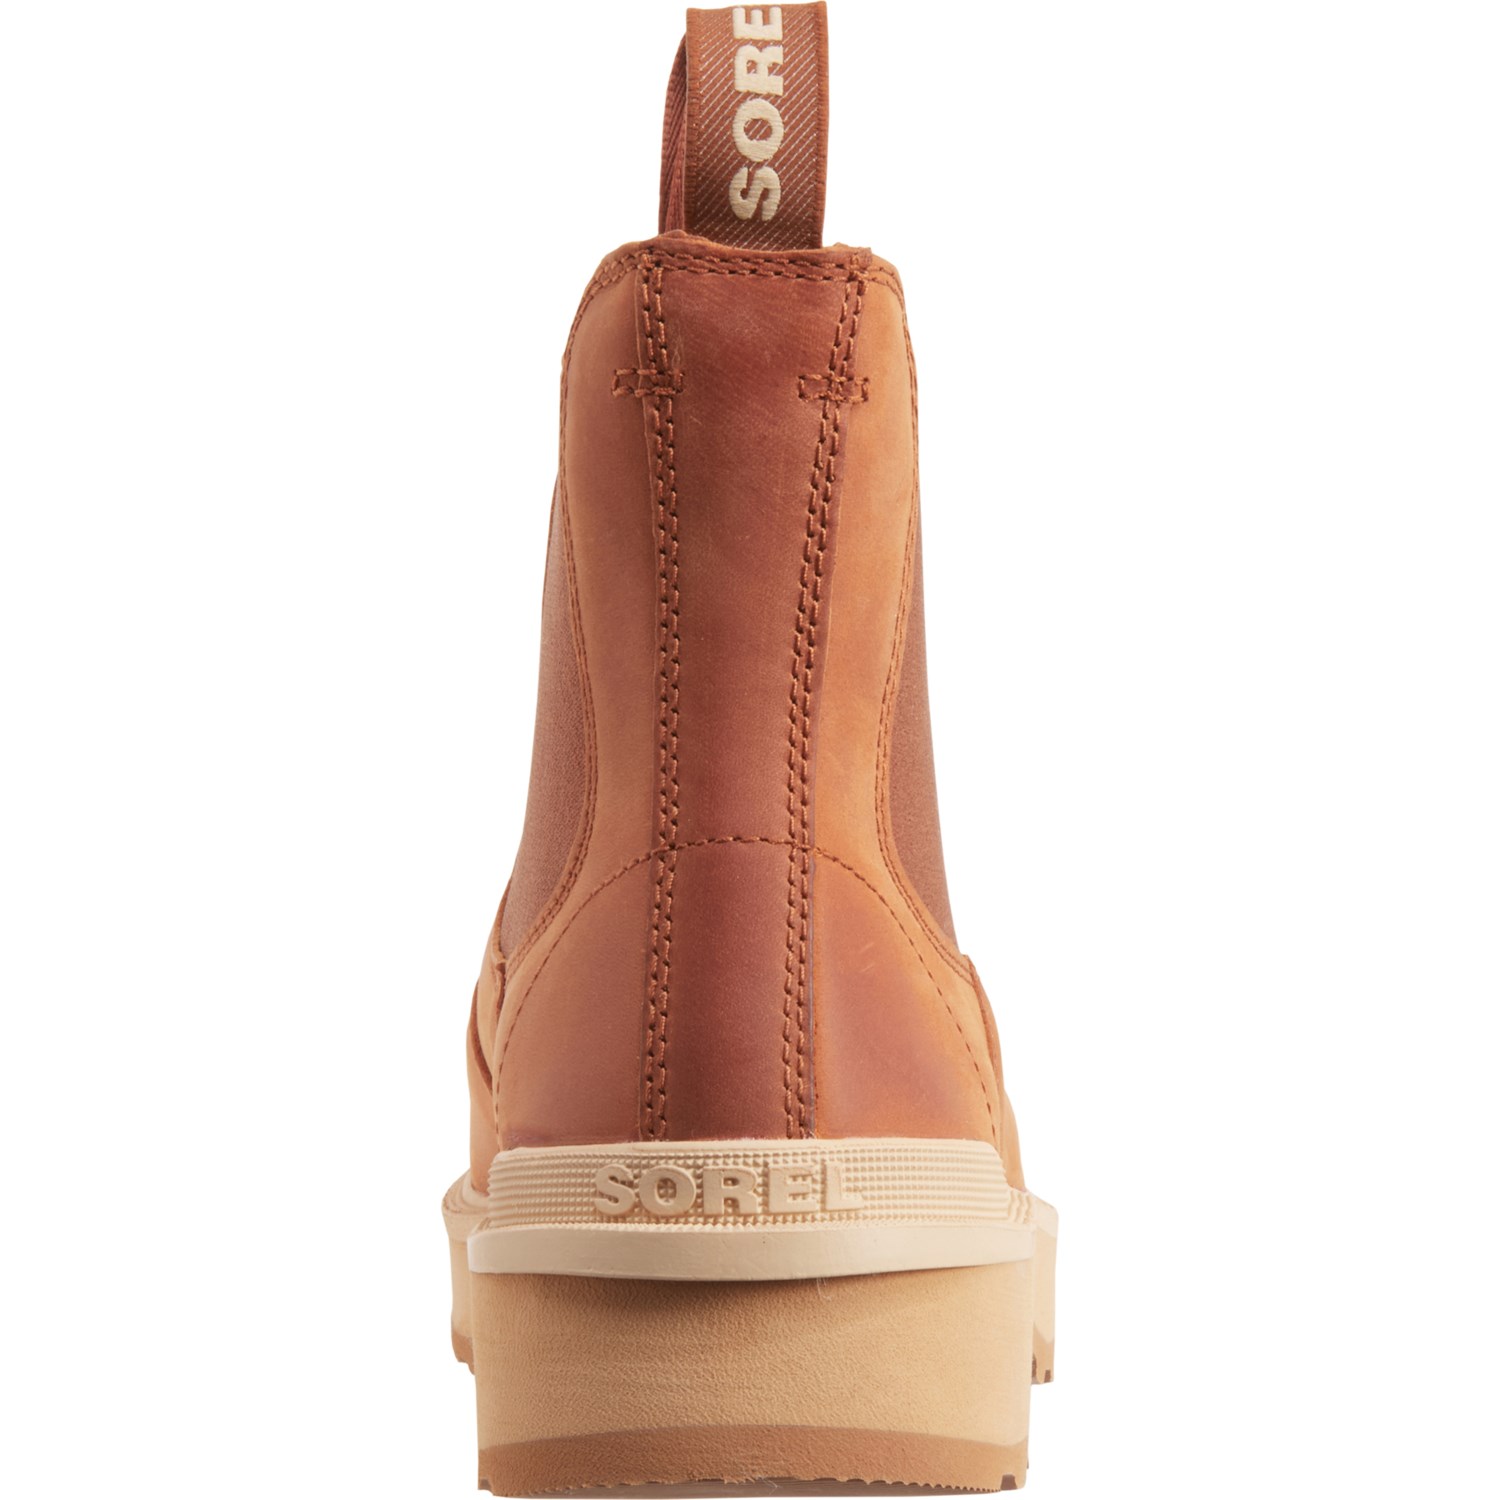 Sorel Hi-Line Chelsea Boots - Waterproof, Leather (For Women)